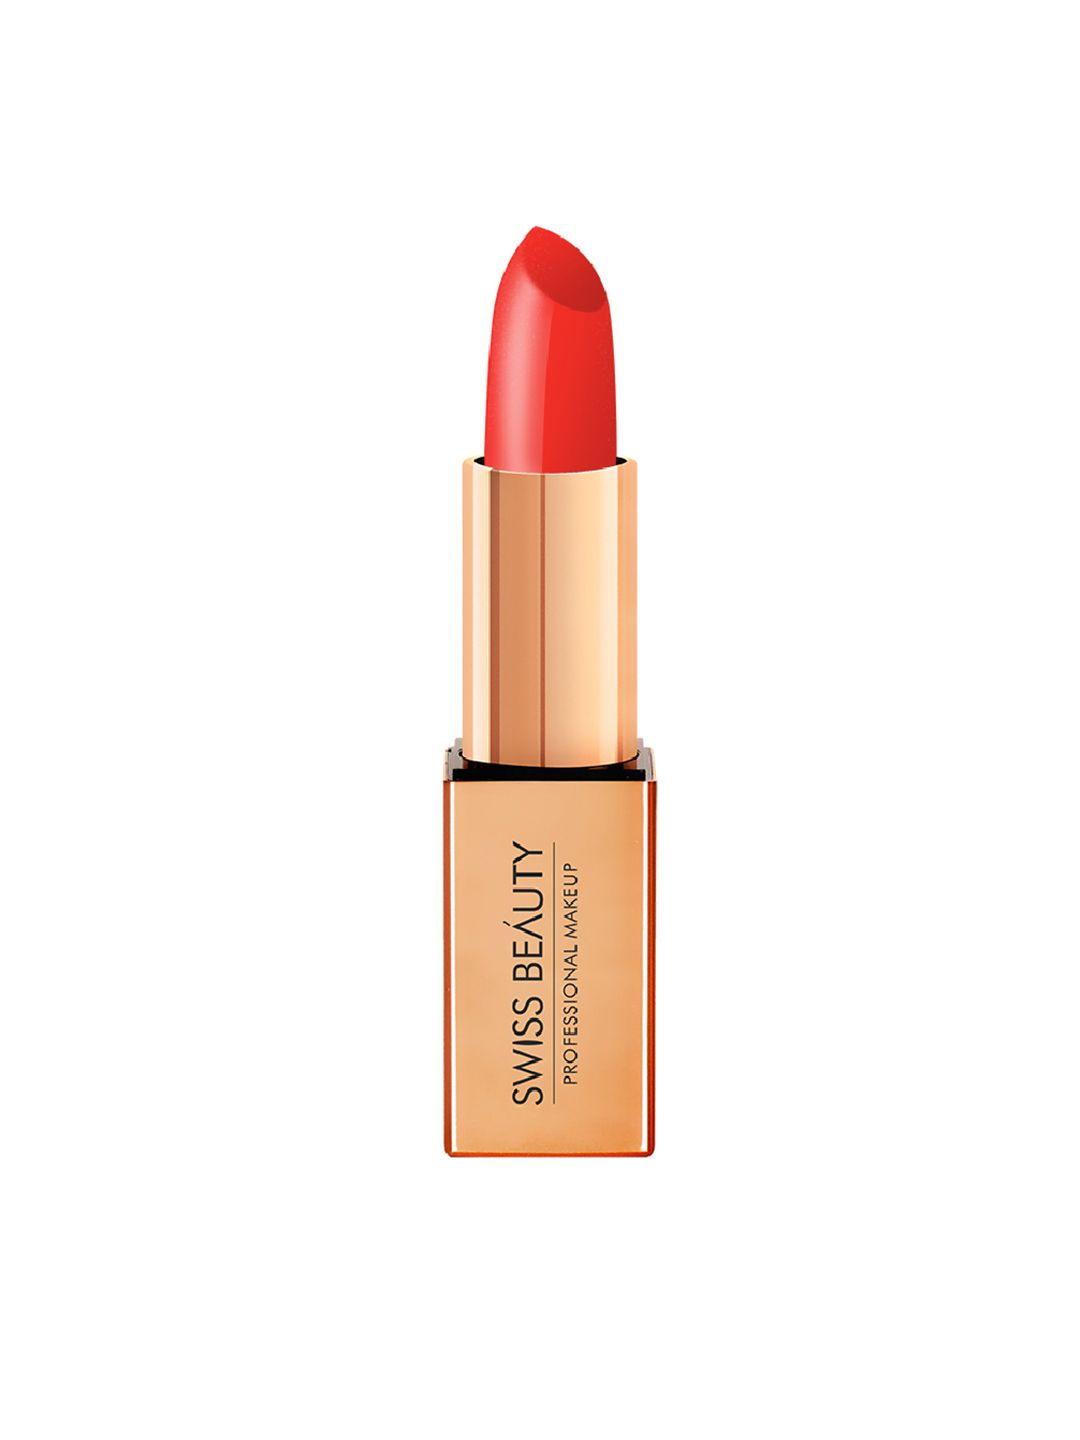 SWISS BEAUTY Silk Matte Lipstick - 02 Orange Red Price in India